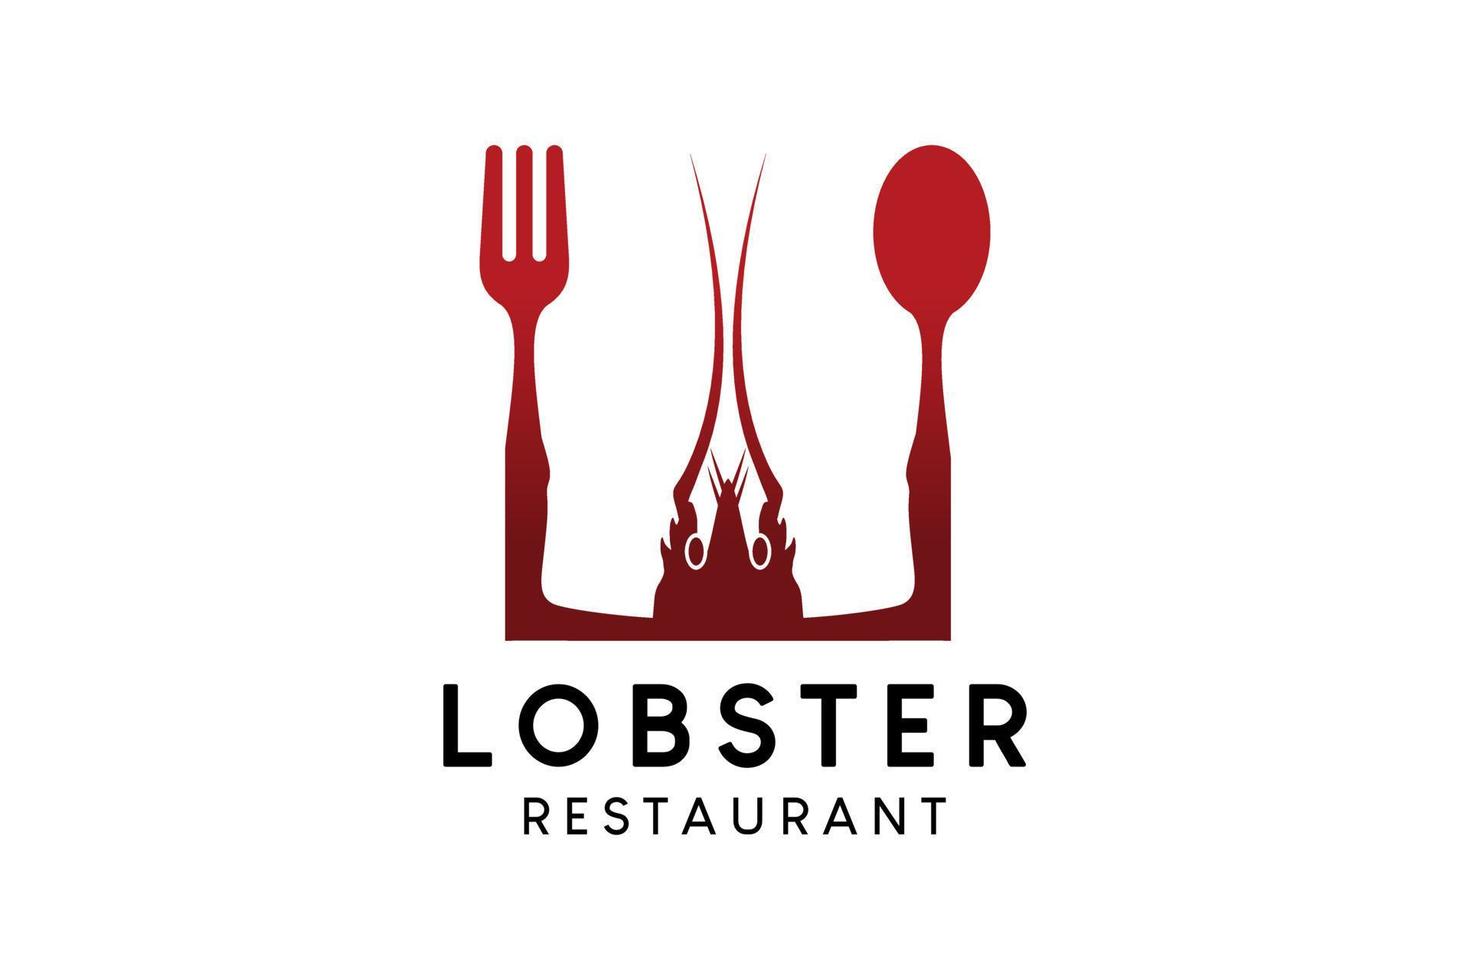 Lobster icon logo design with box concept, lobster restaurant or seafood restaurant logo vector illustration